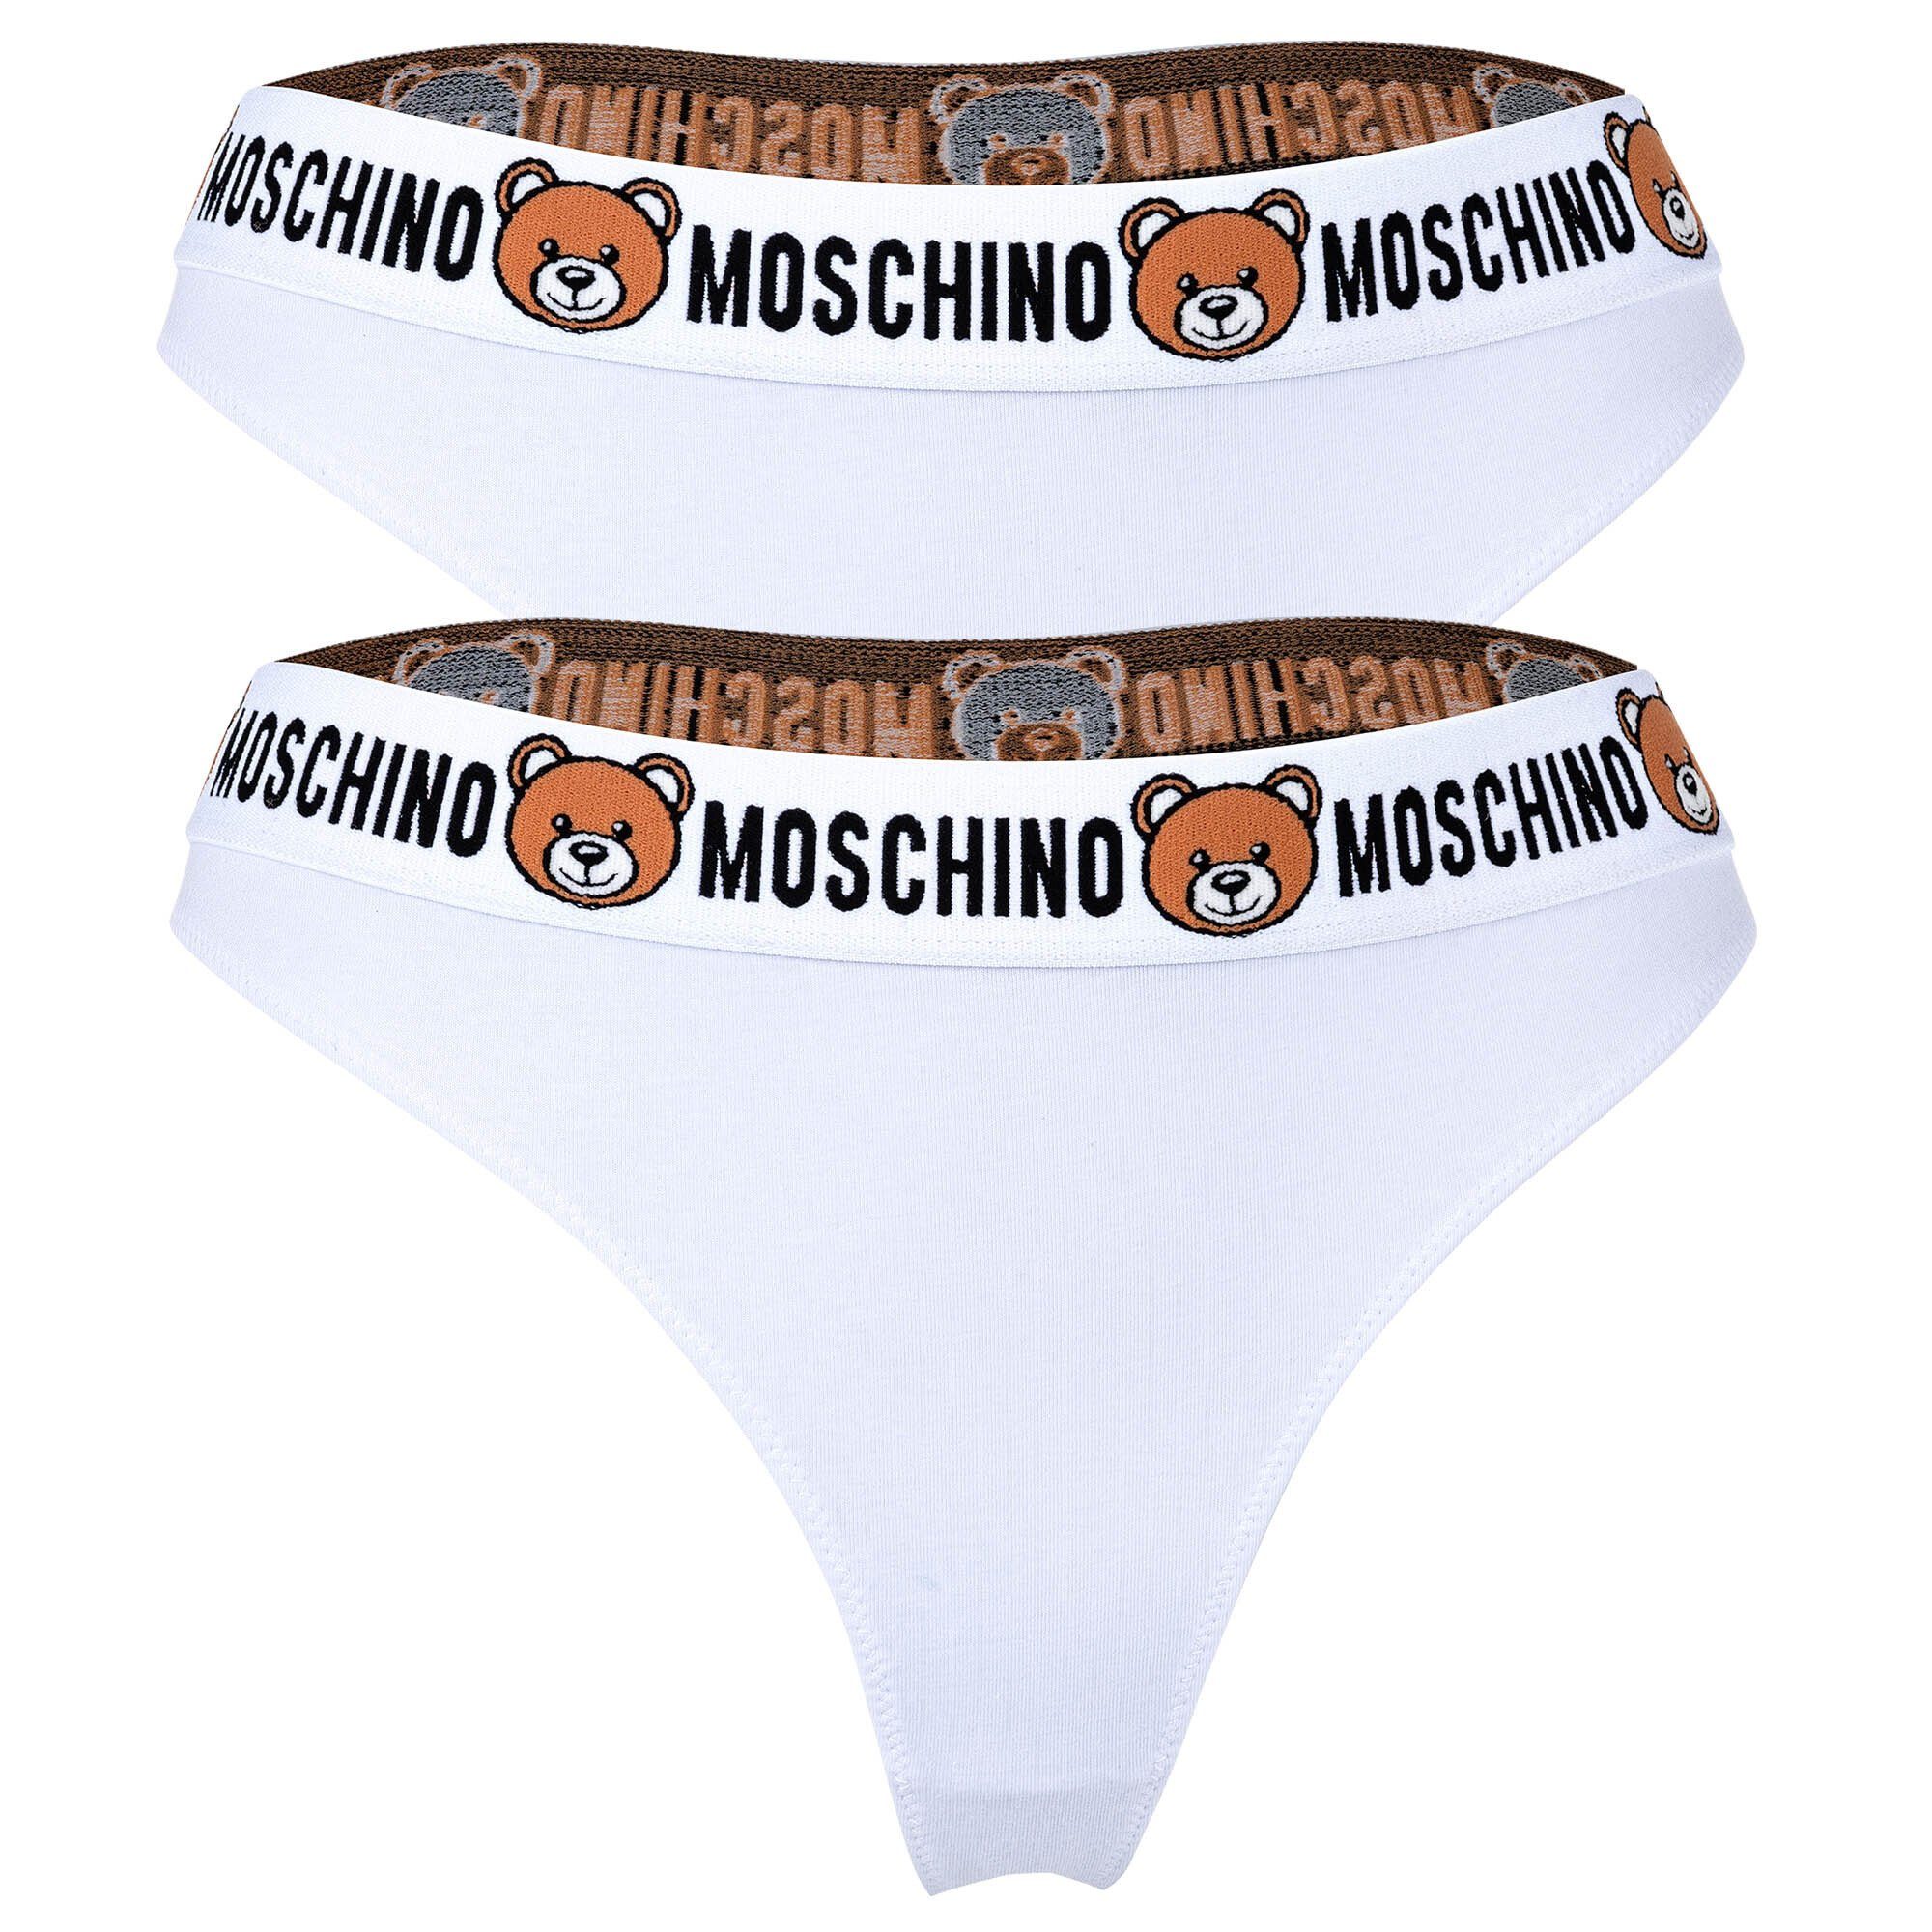 Moschino String Damen String 2er Pack - Underbear, Unterhose Weiß